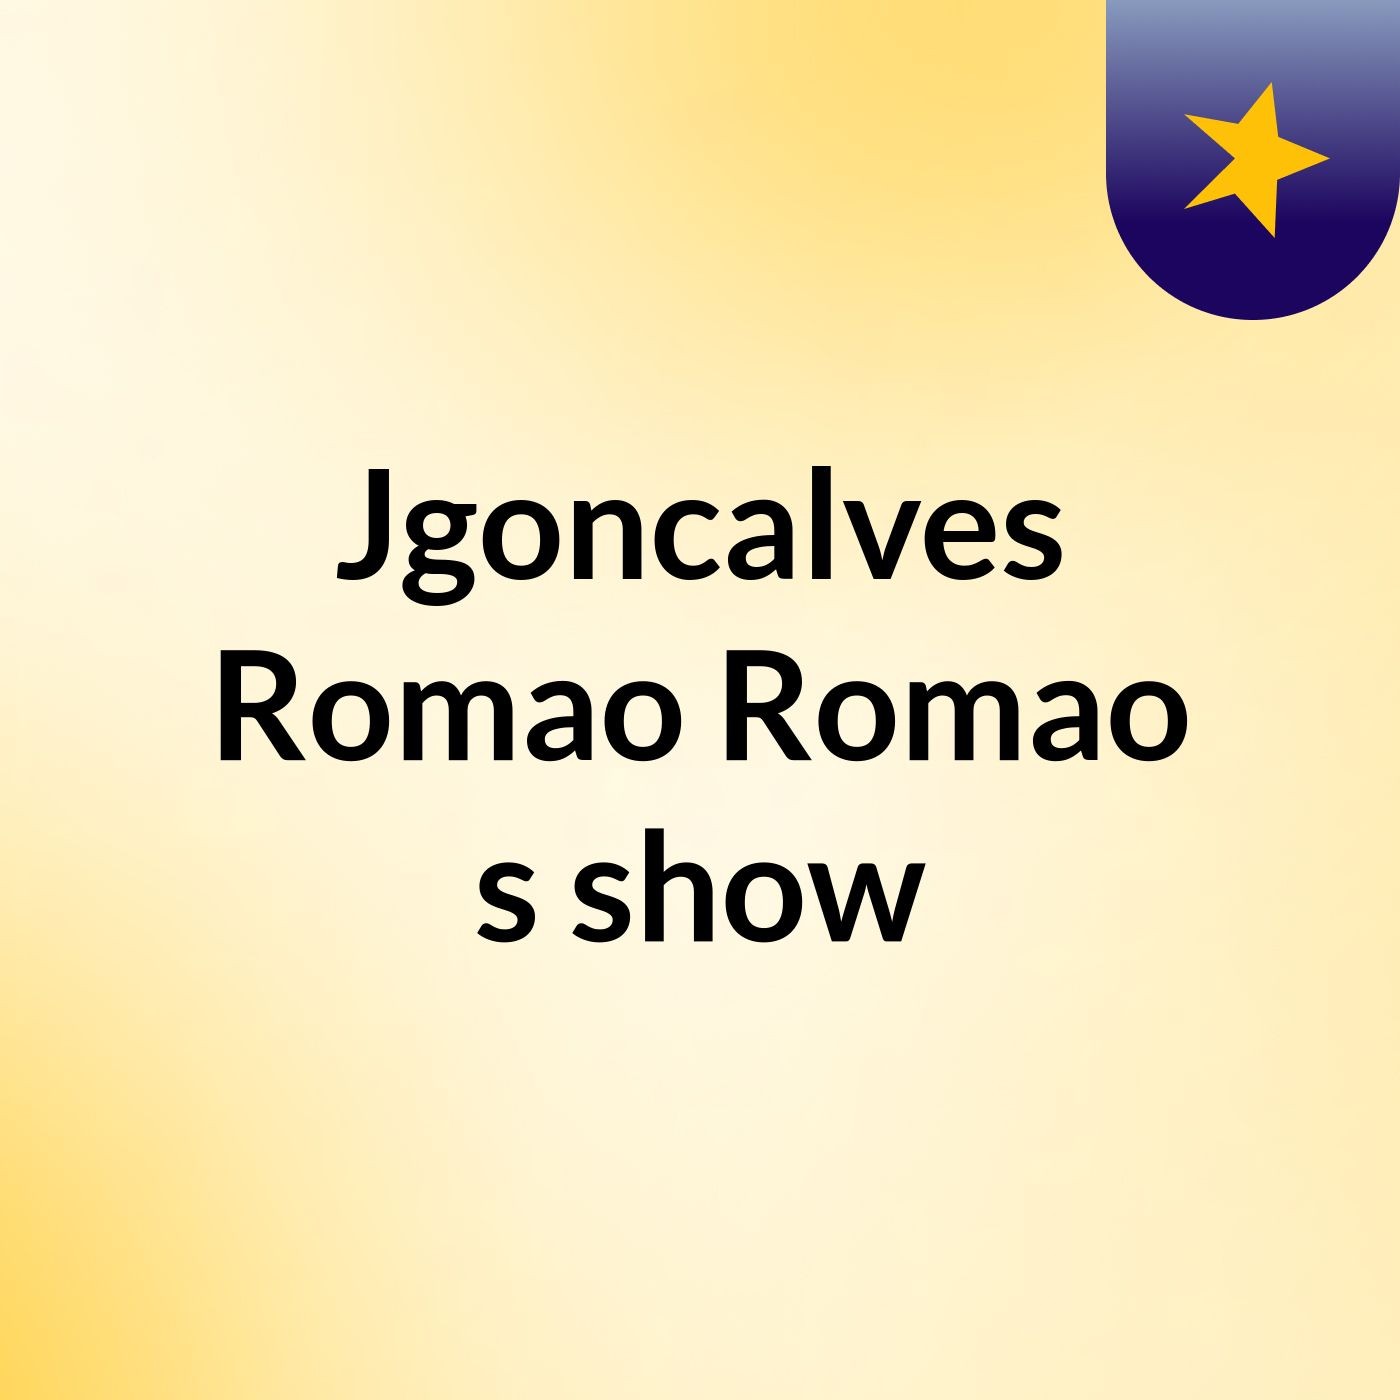 Jgoncalves Romao Romao's show